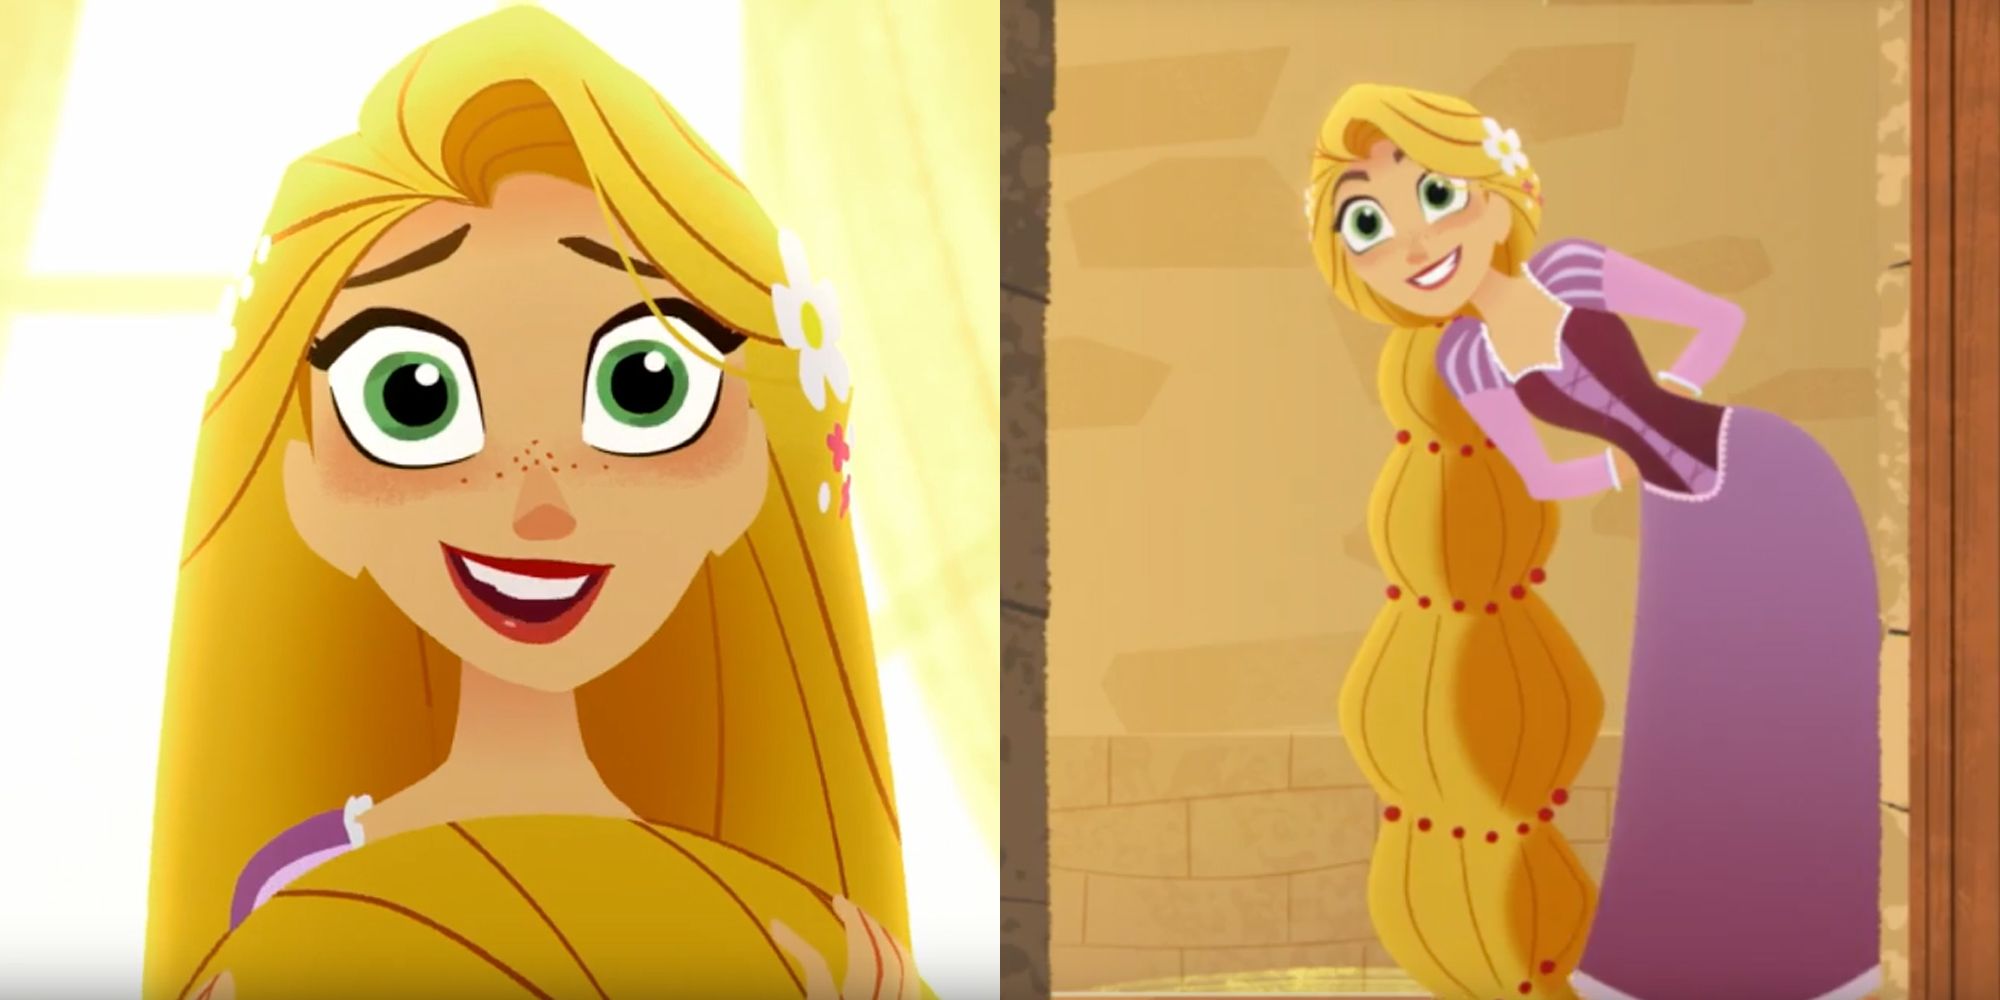 Tangled' Disney Channel TV Series Reveals First Teaser - Rapunzel's Long  Hair Returns